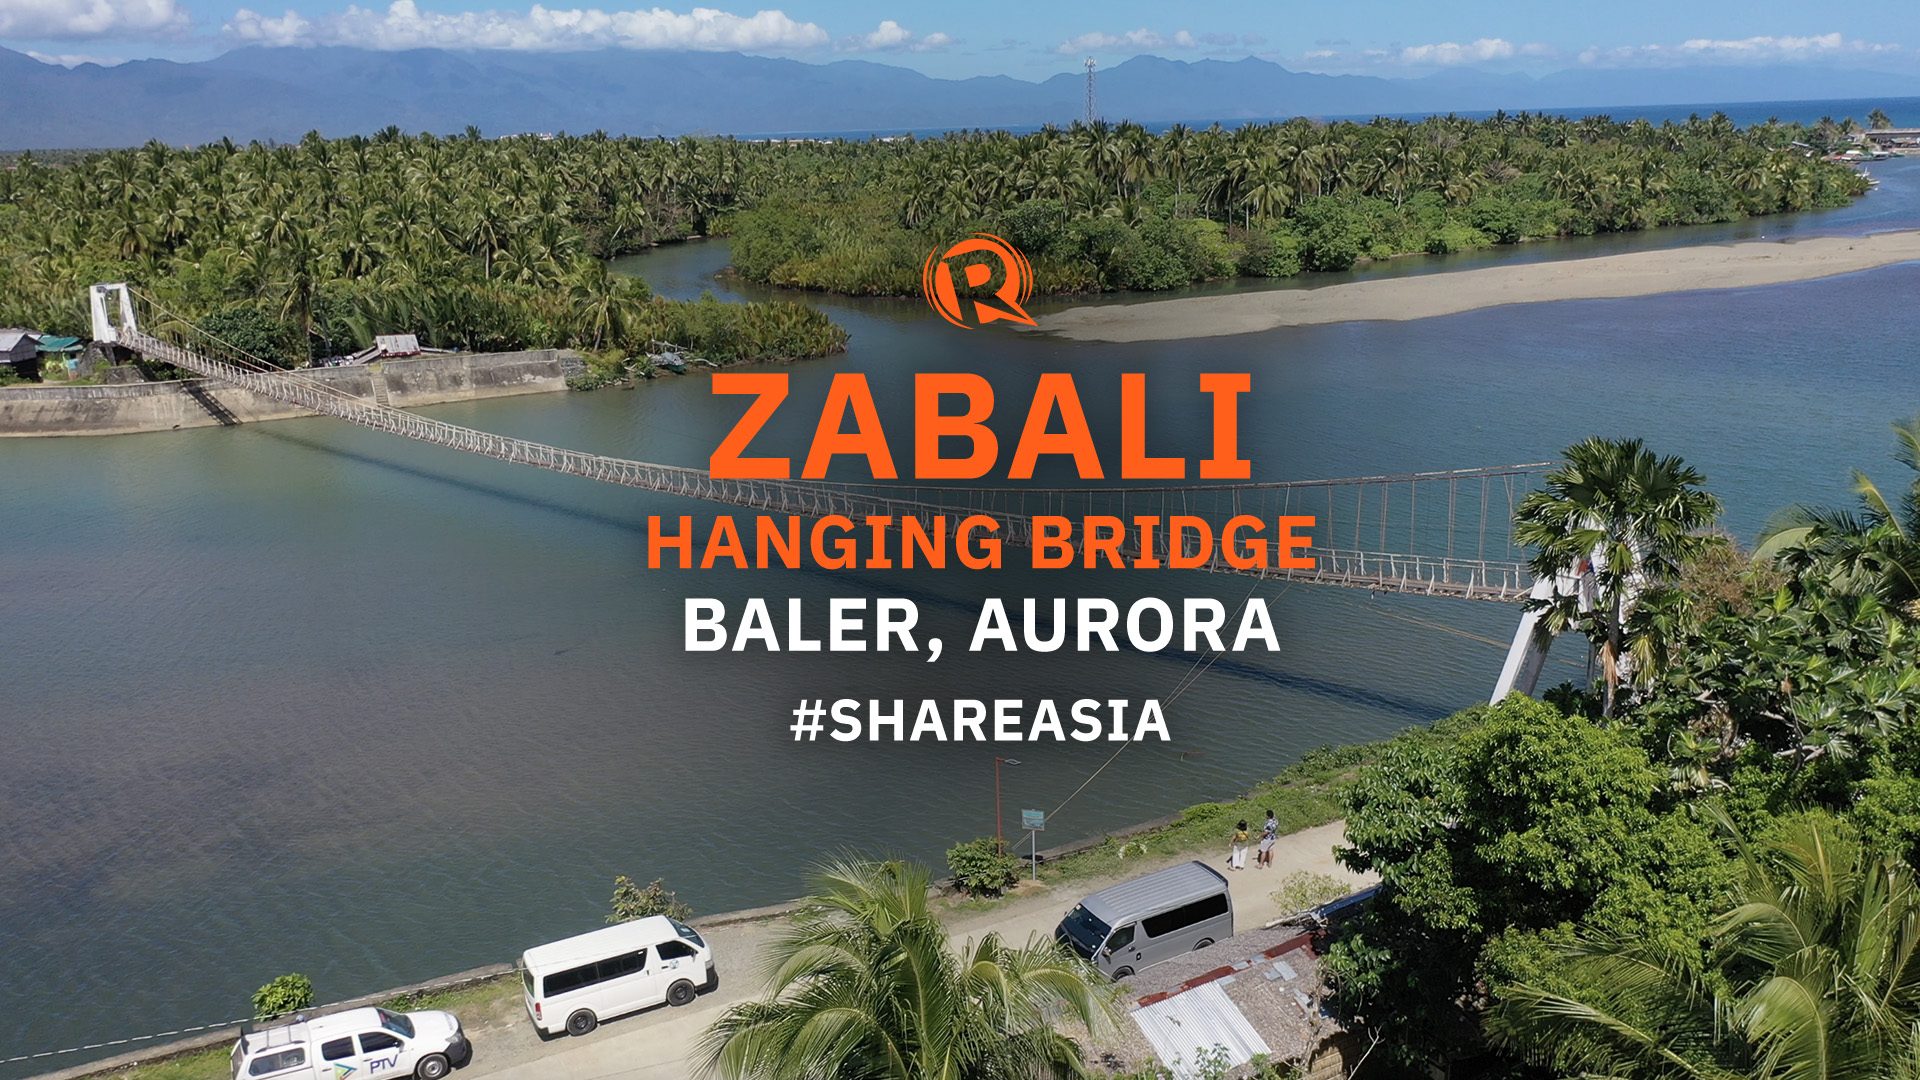 WATCH: Crossing the Zabali hanging bridge in Baler